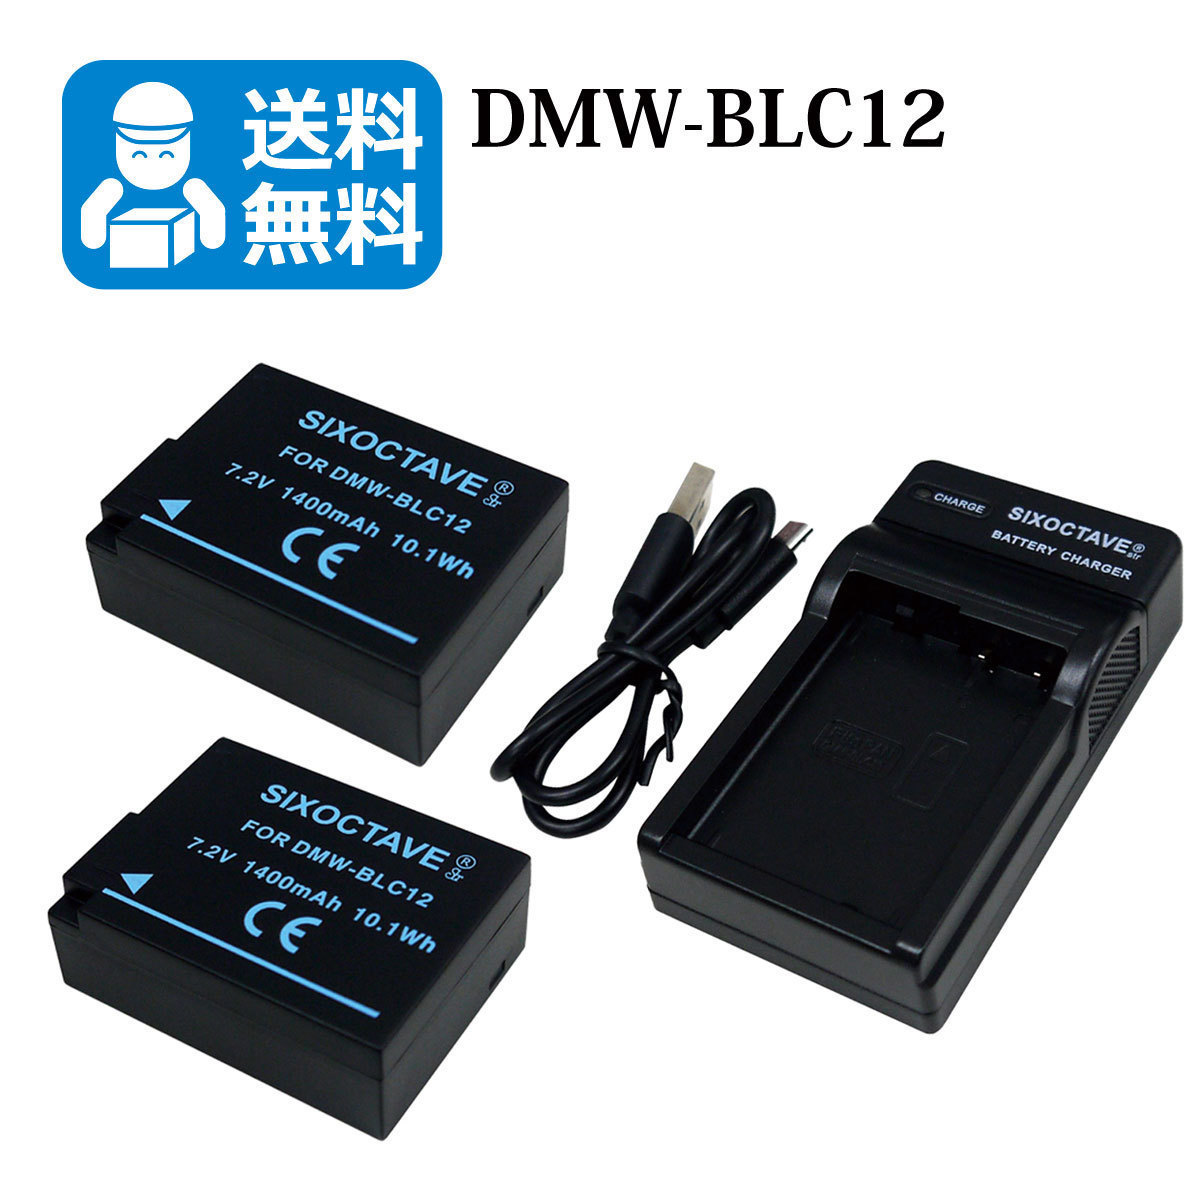 Panasonic free shipping DMW-BLC12 interchangeable battery 2 piece . interchangeable charger 1 piece DMC-GH2H / DMC-GH2HGK / DMC-GH2HK / DMC-GH2HS